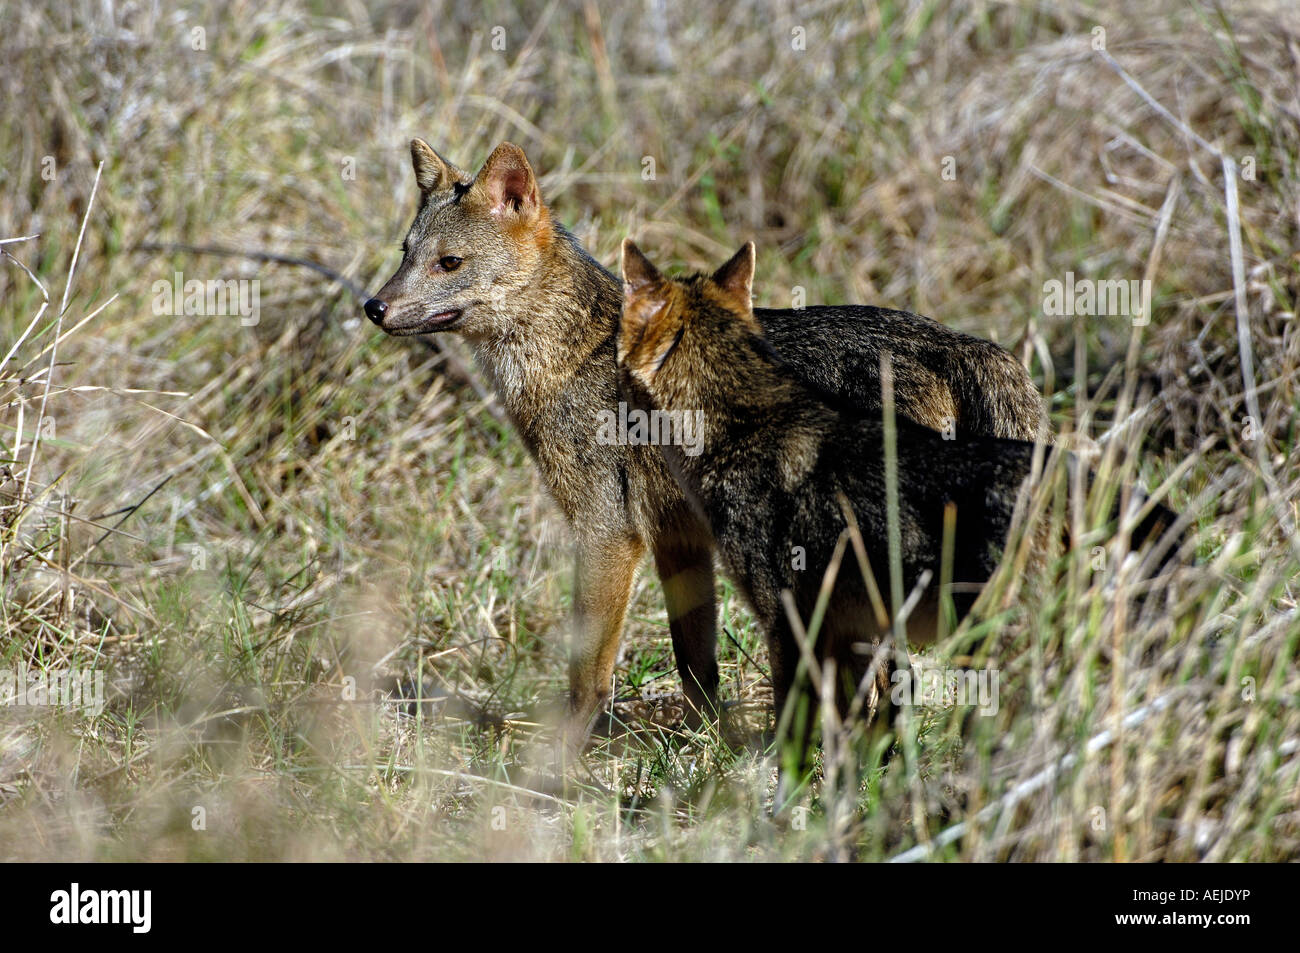 Fox, Cerdocyon thous, Pantanal, Brasil Stock Photo